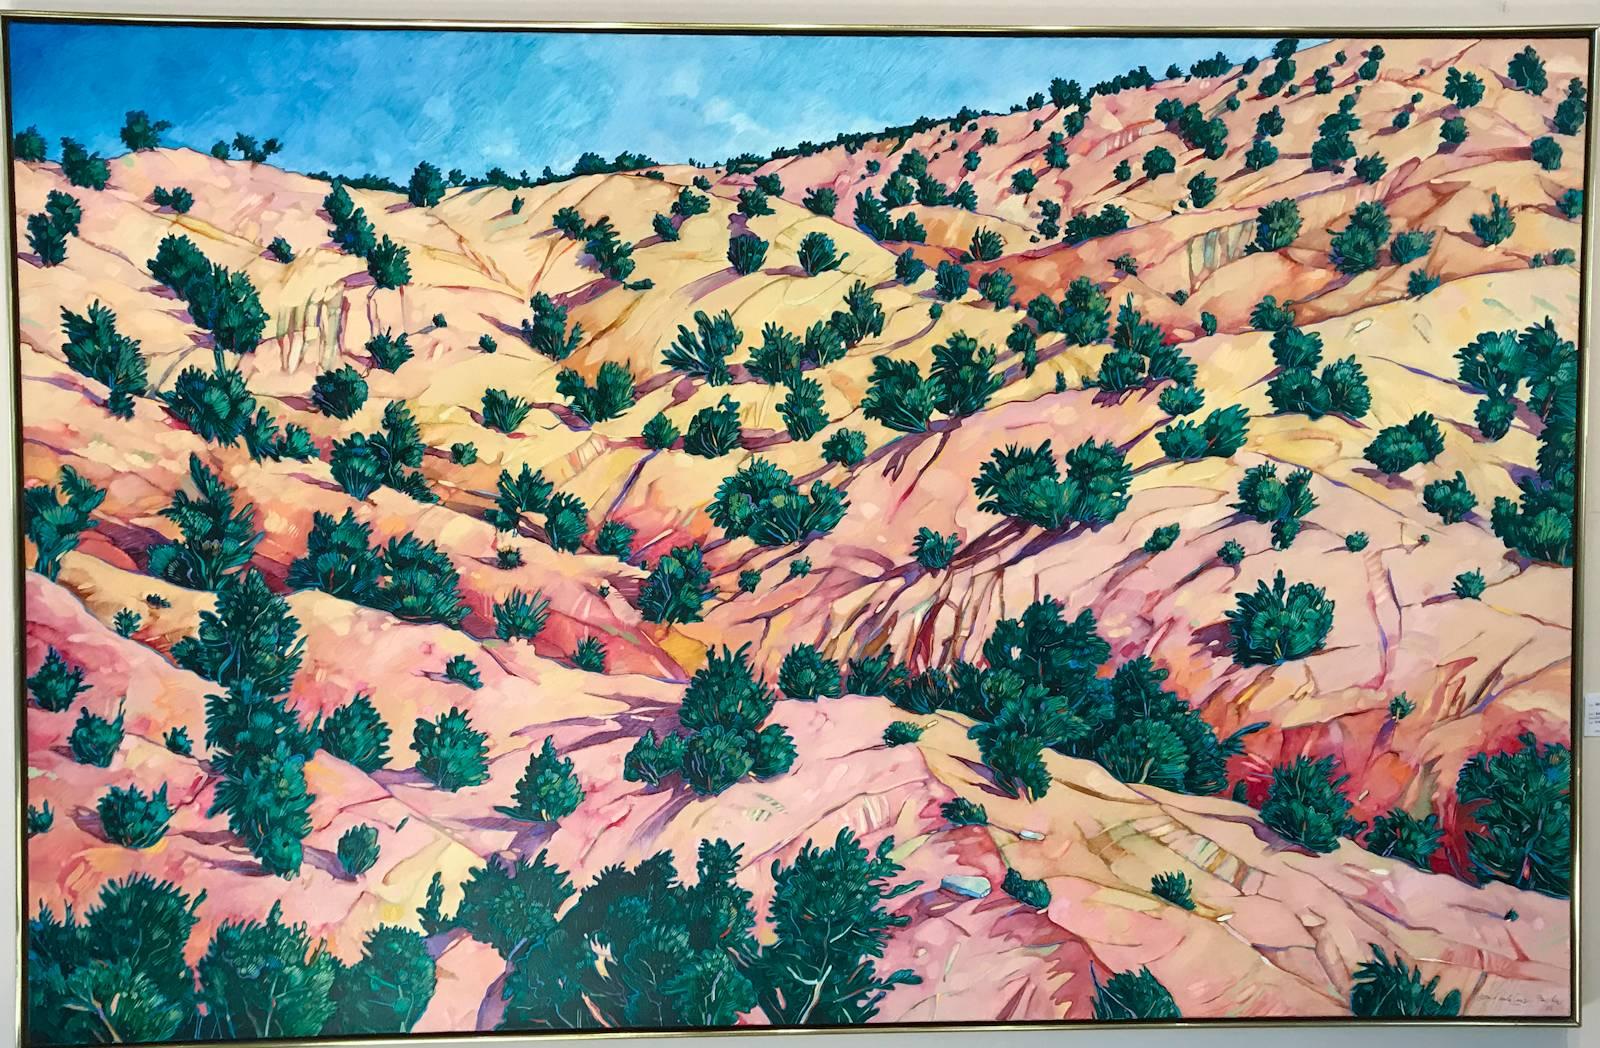 John Fincher Landscape Painting - Around Santa Cruz, New Mexico landscape painting, horizontal, desert 